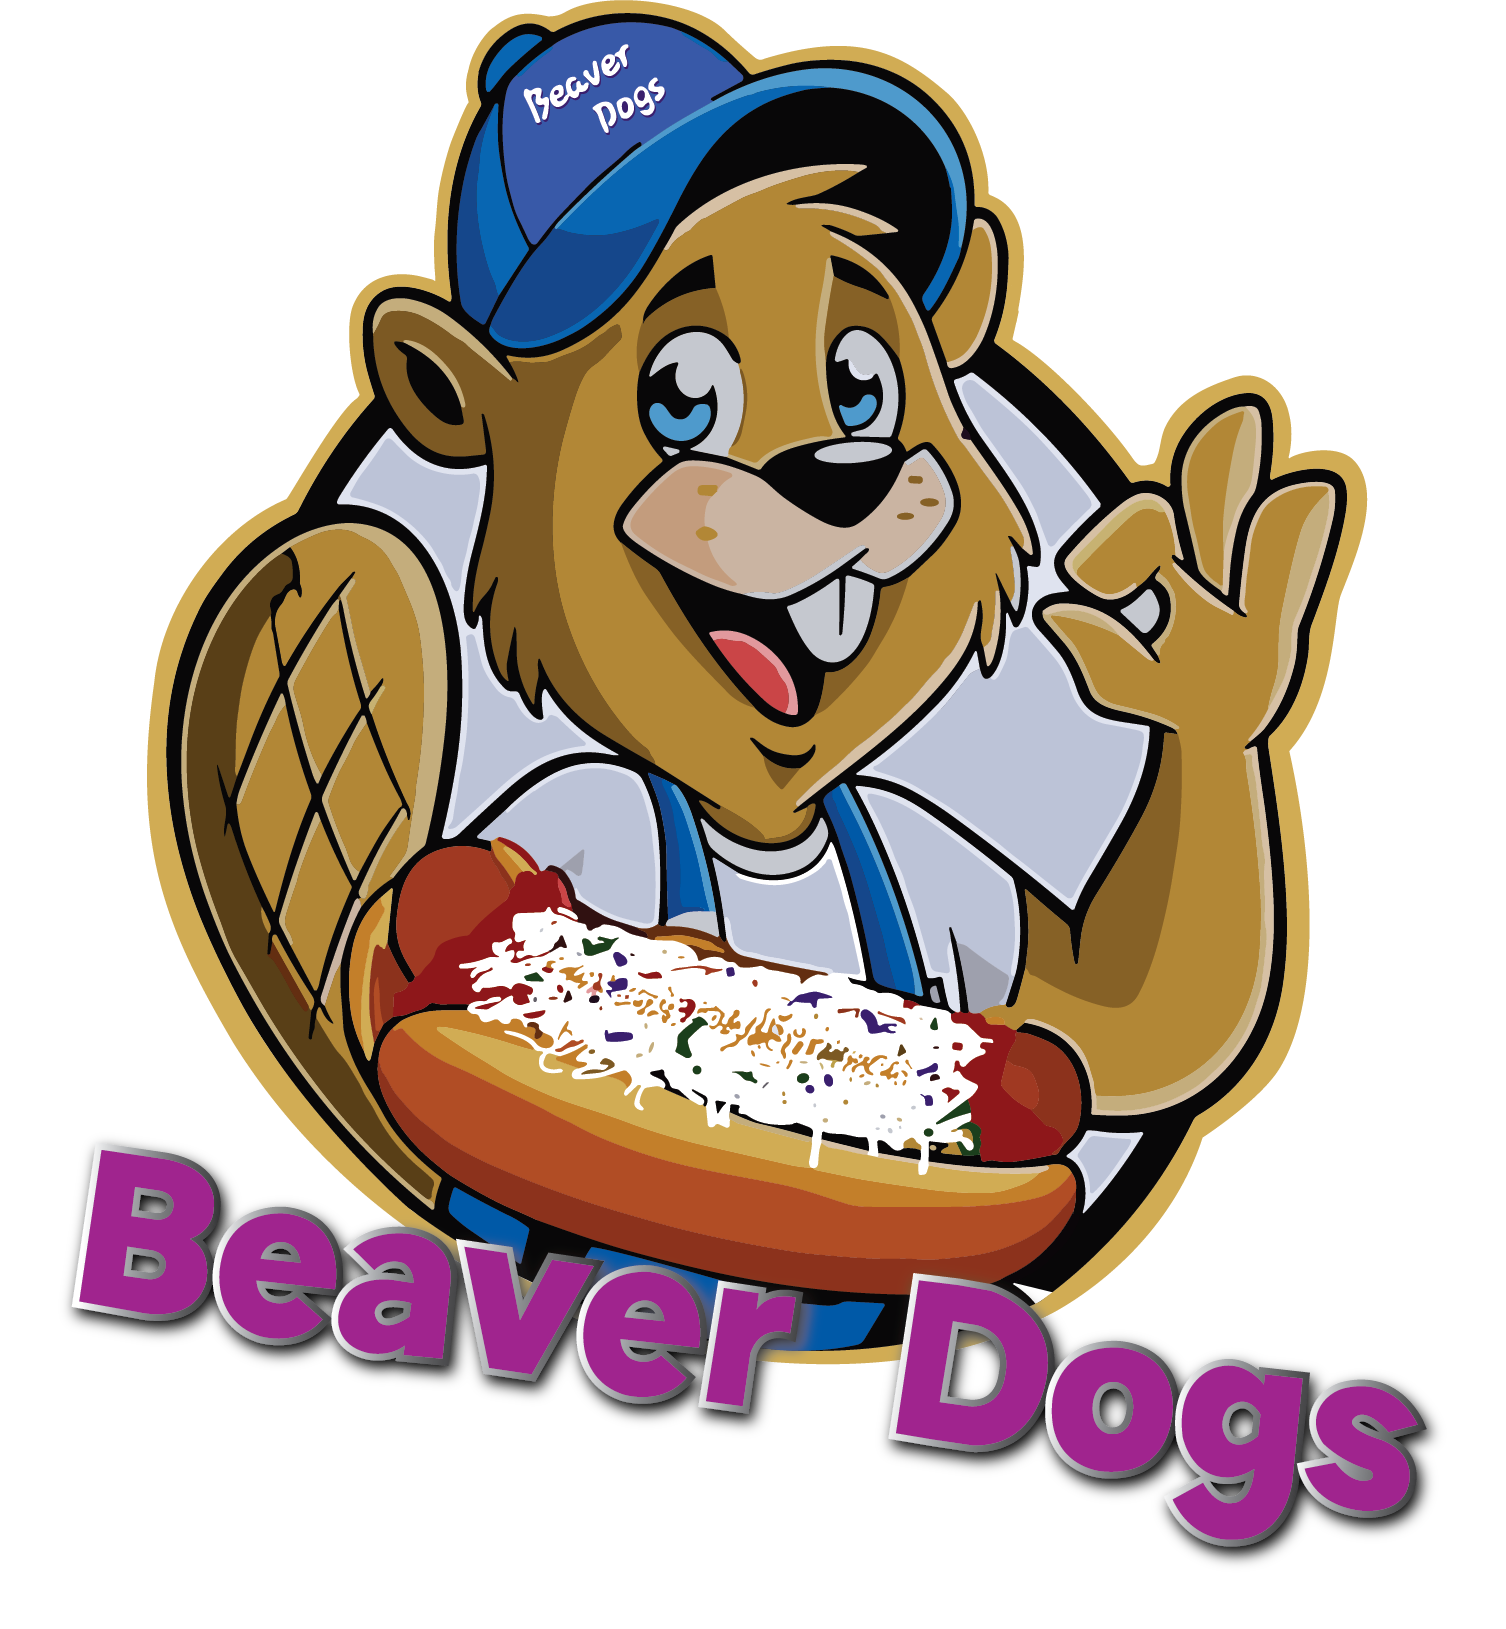 Beaver Dogs
